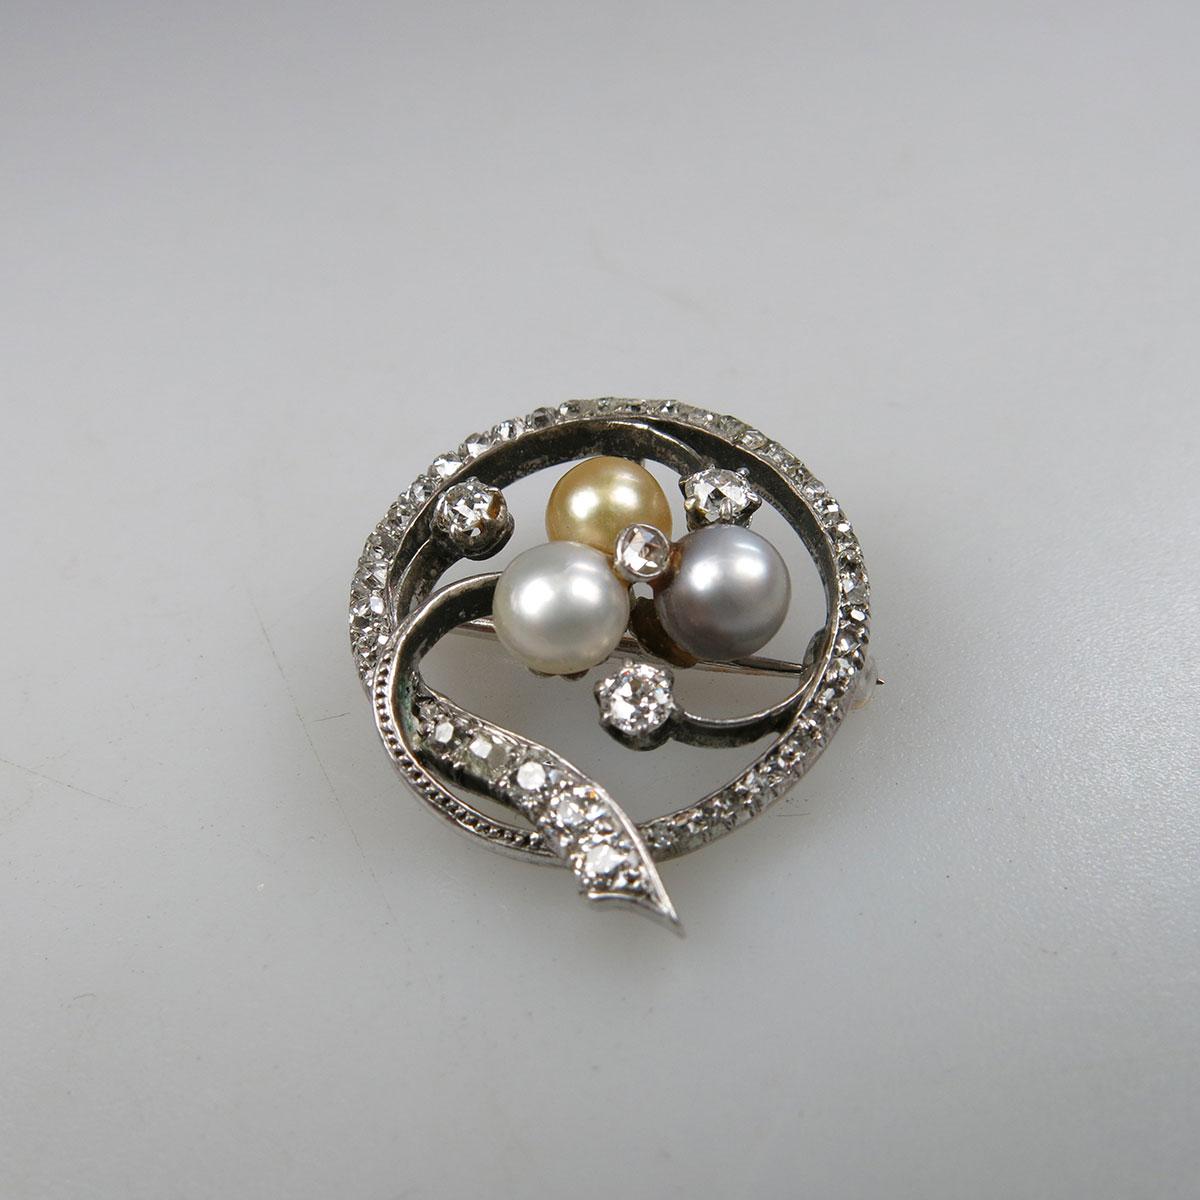 14k White Gold And Silver Circular Pin